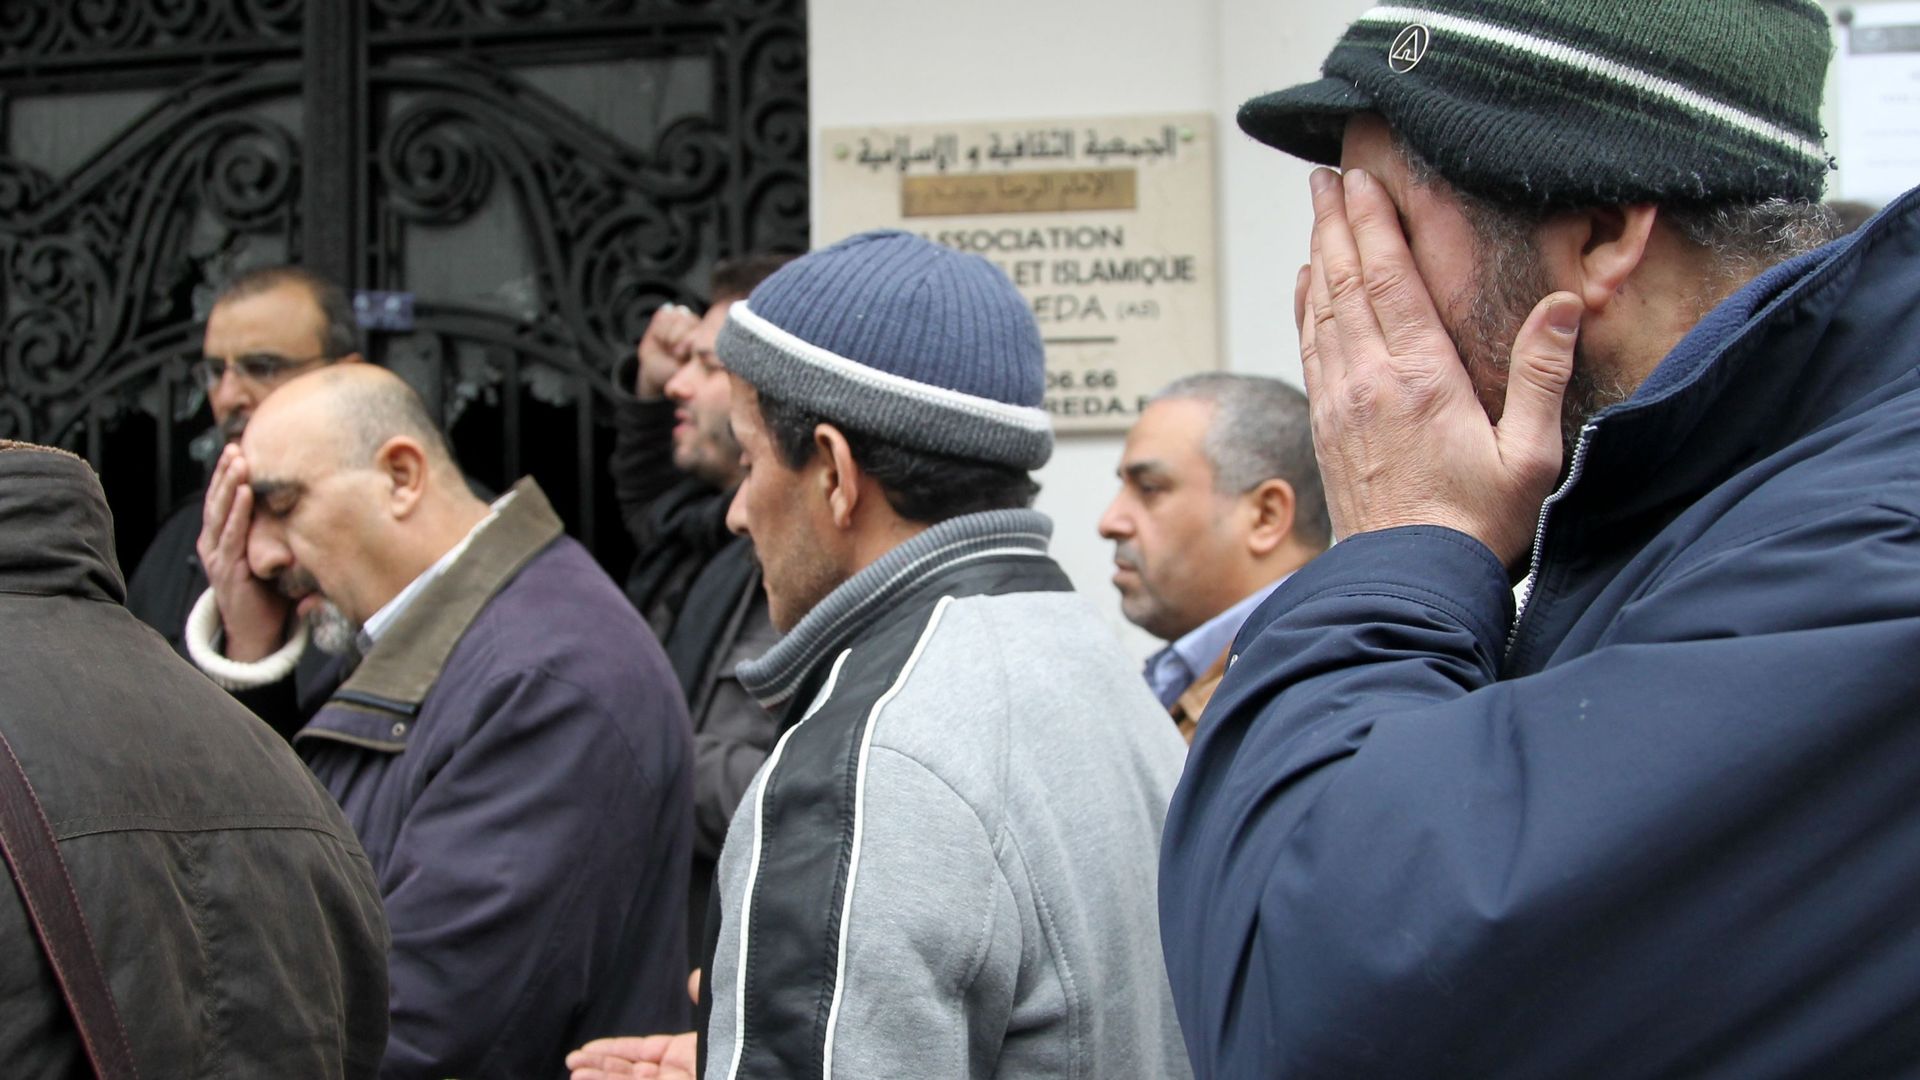 Les associations musulmanes se distancient de "la barbarie de l'Etat islamique"